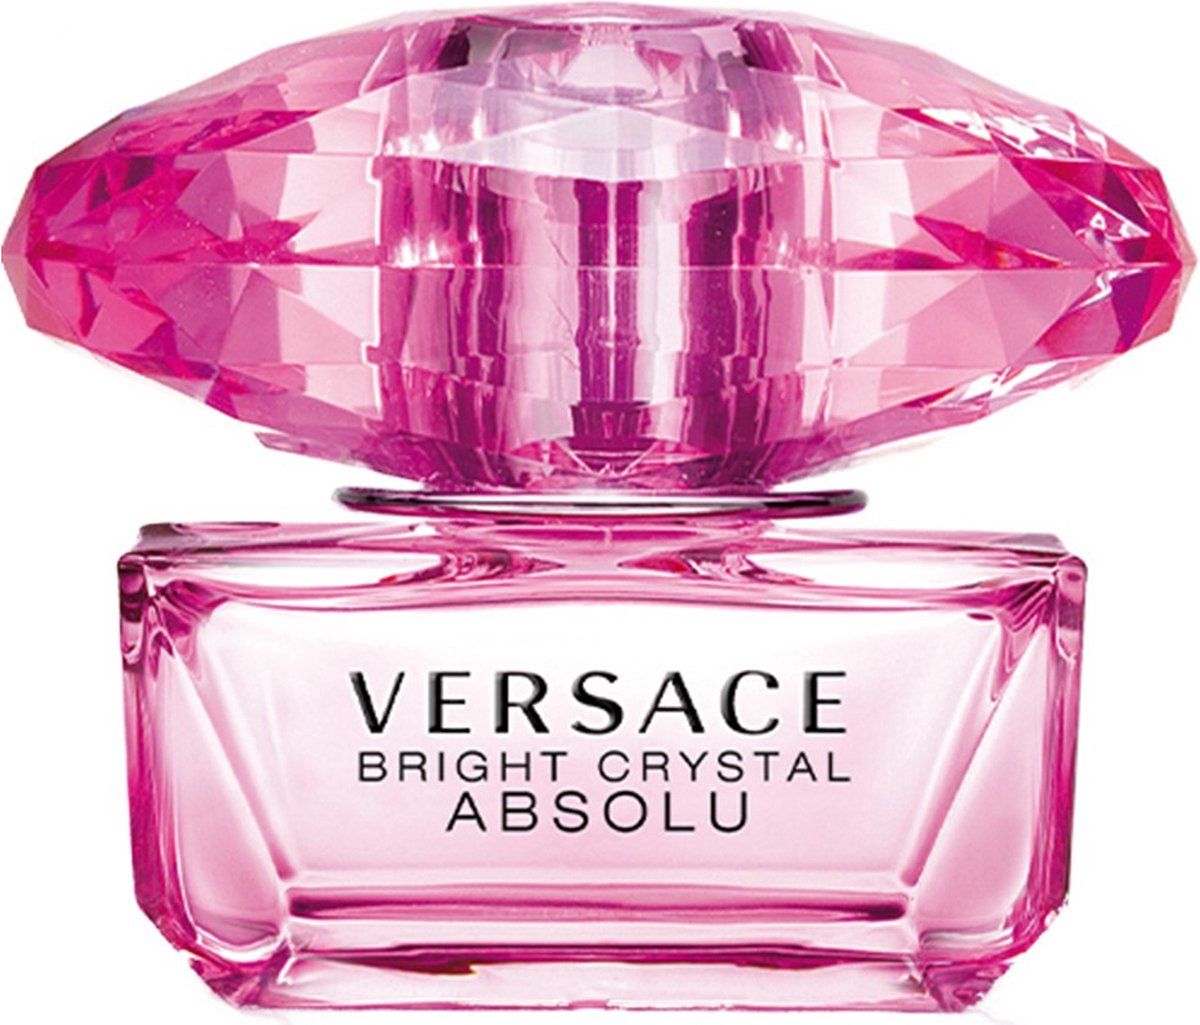 Versace Bright Crystal Absolu Eau de Parfum Spray 50 ml